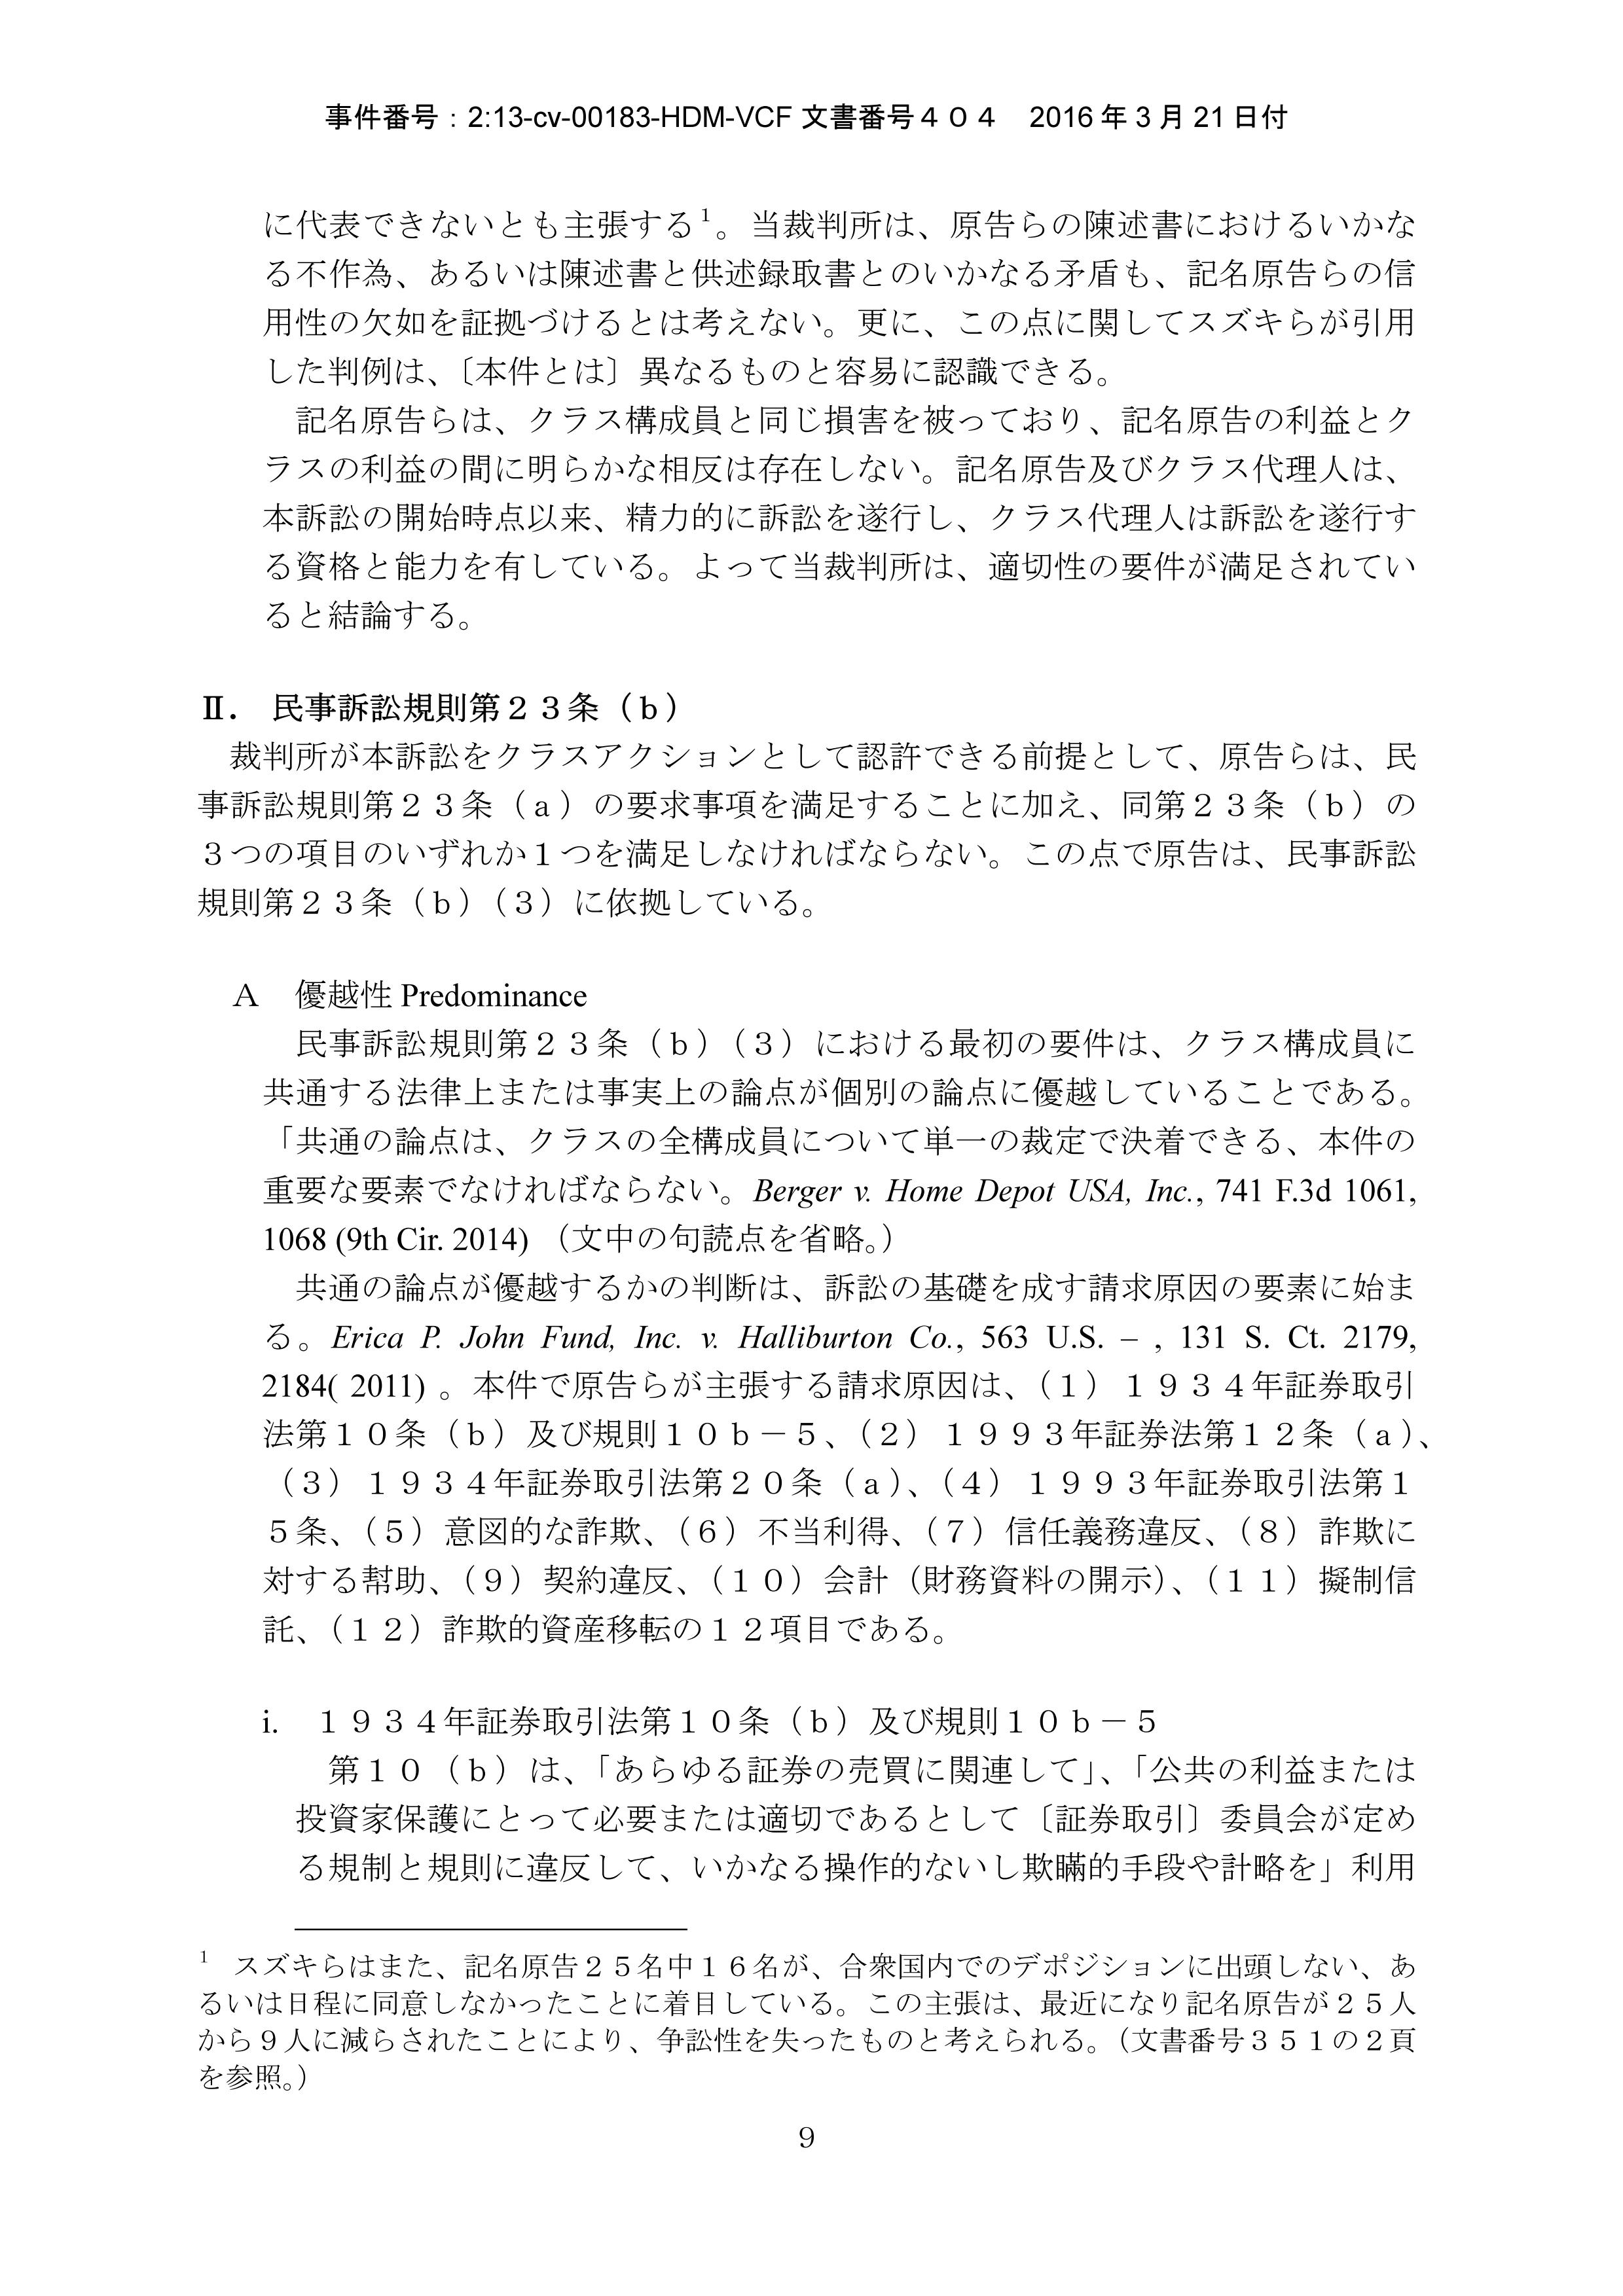 CA_Dkt 404_Order Granting Class Certification_Japanese translation_09